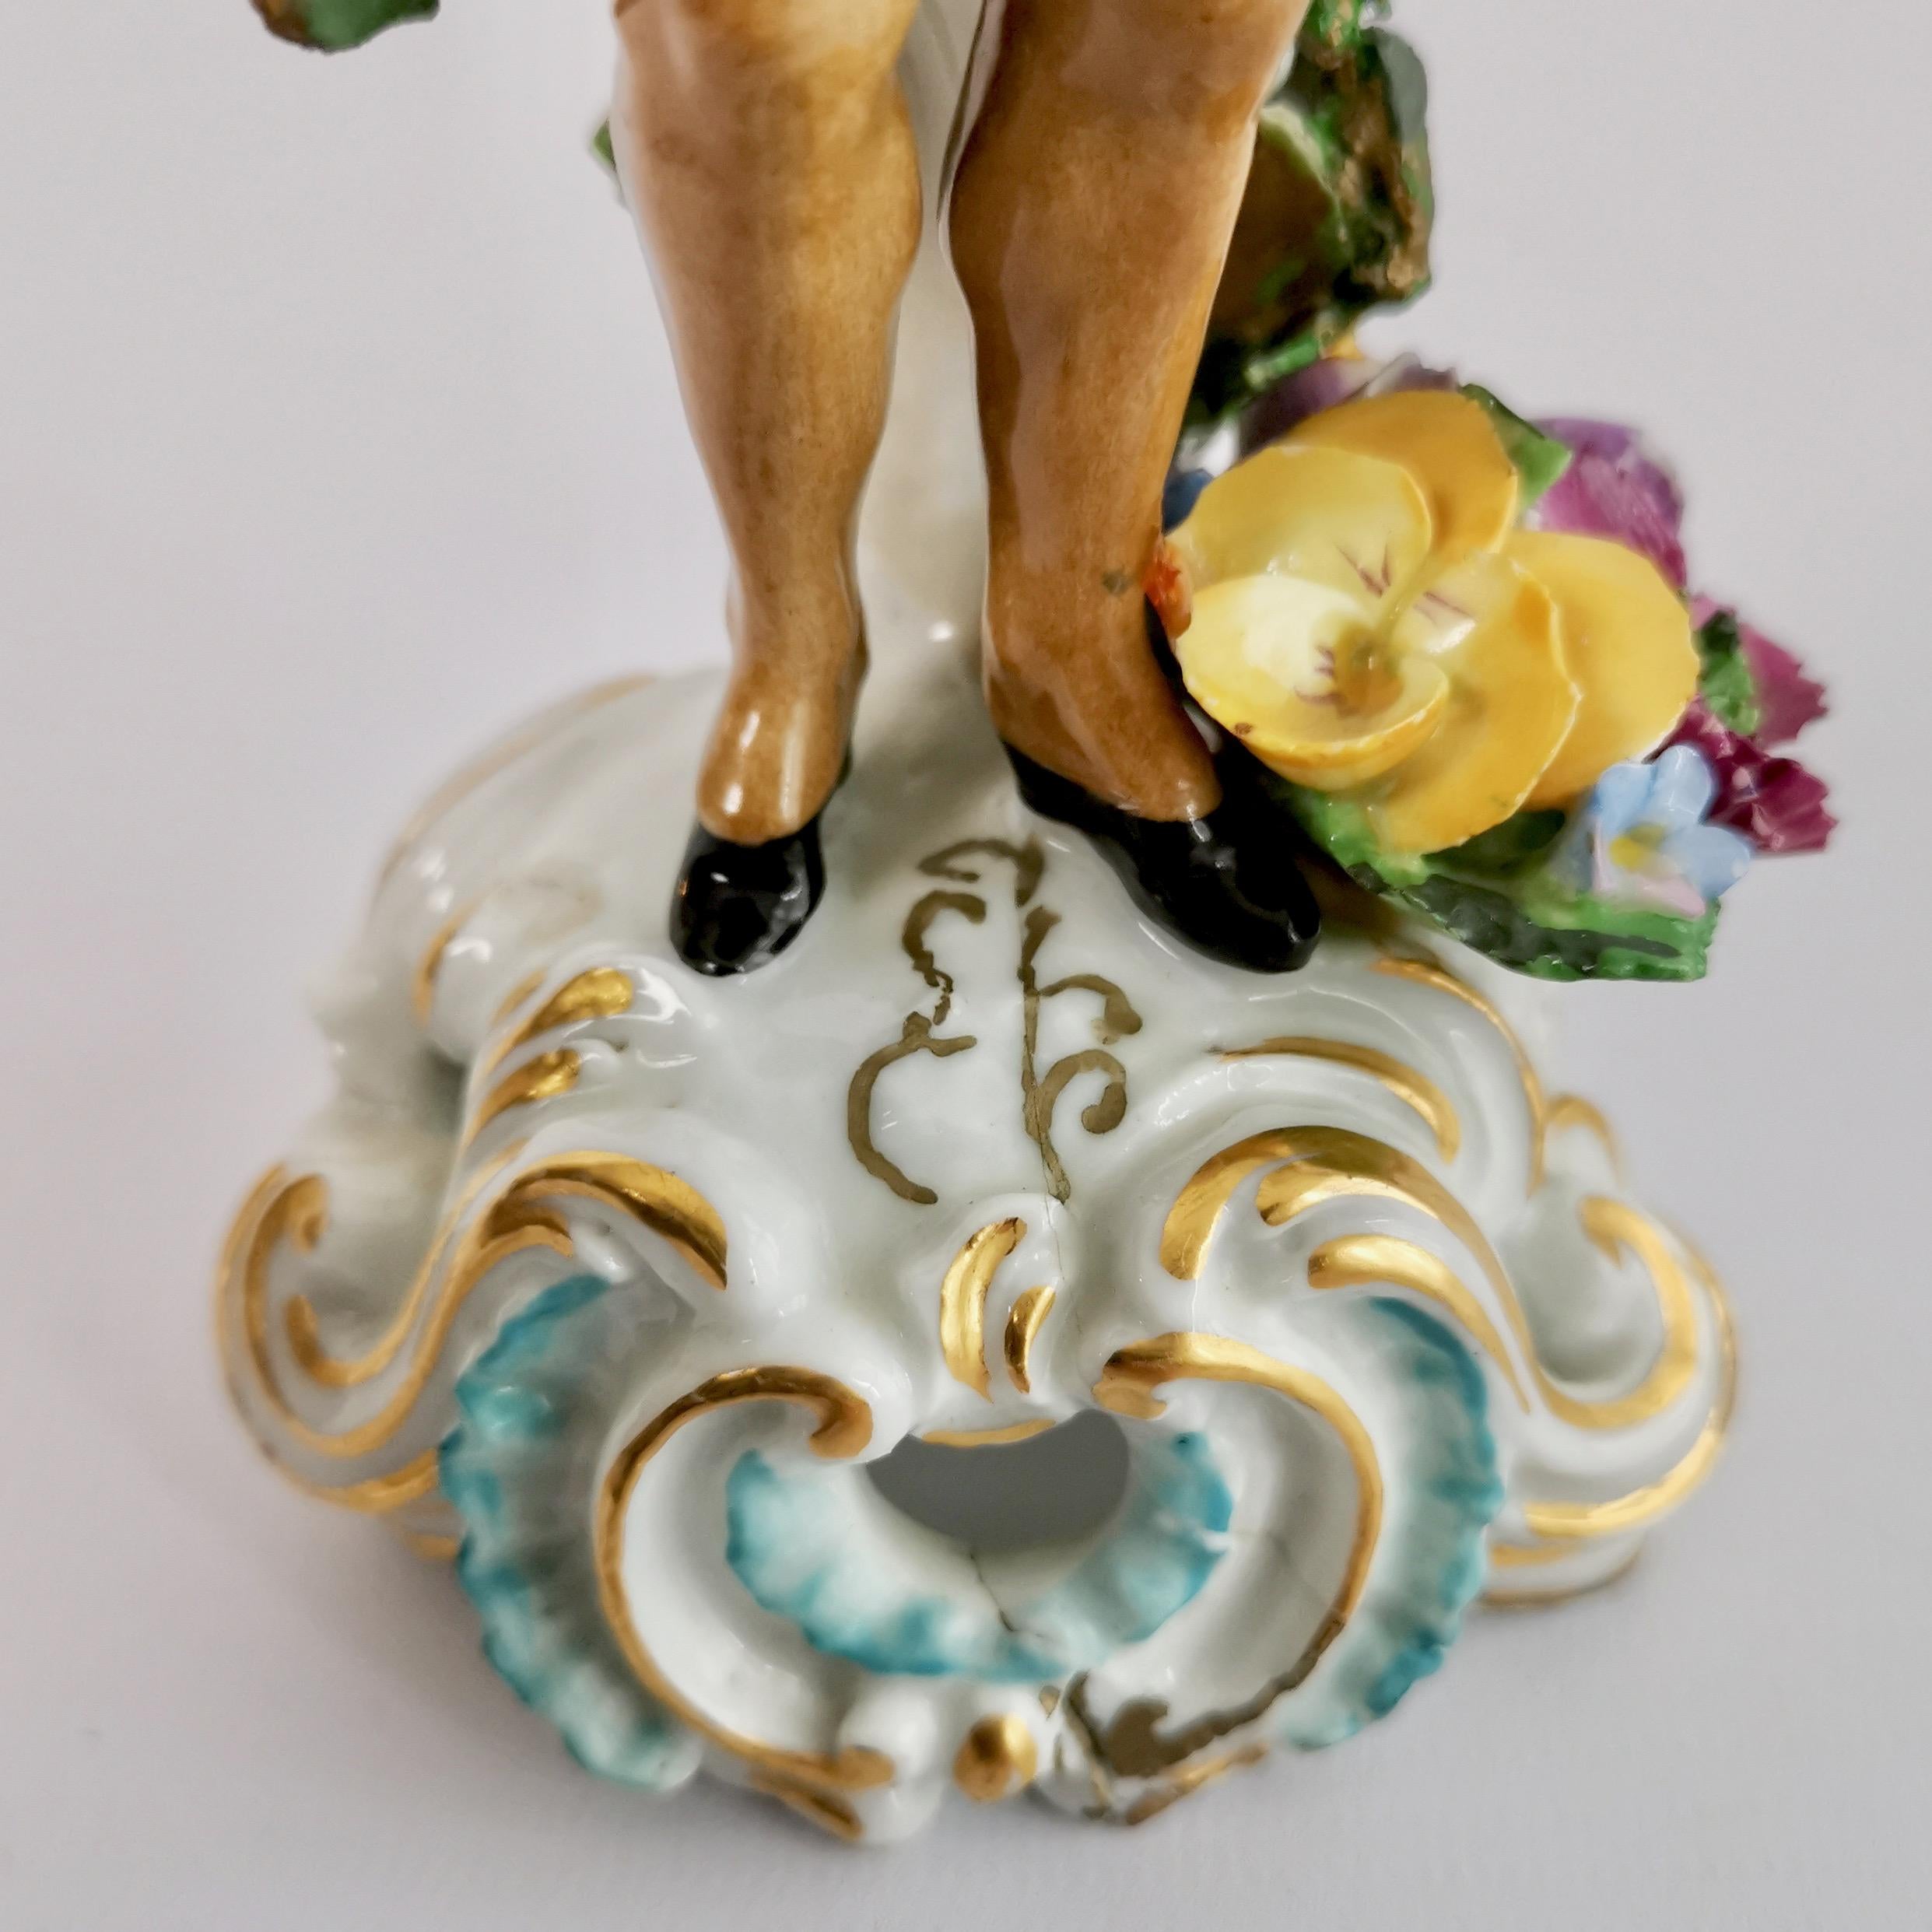 Edmé Samson Porcelain Figure of Piper, Rococo Chelsea style, 19th Century 6